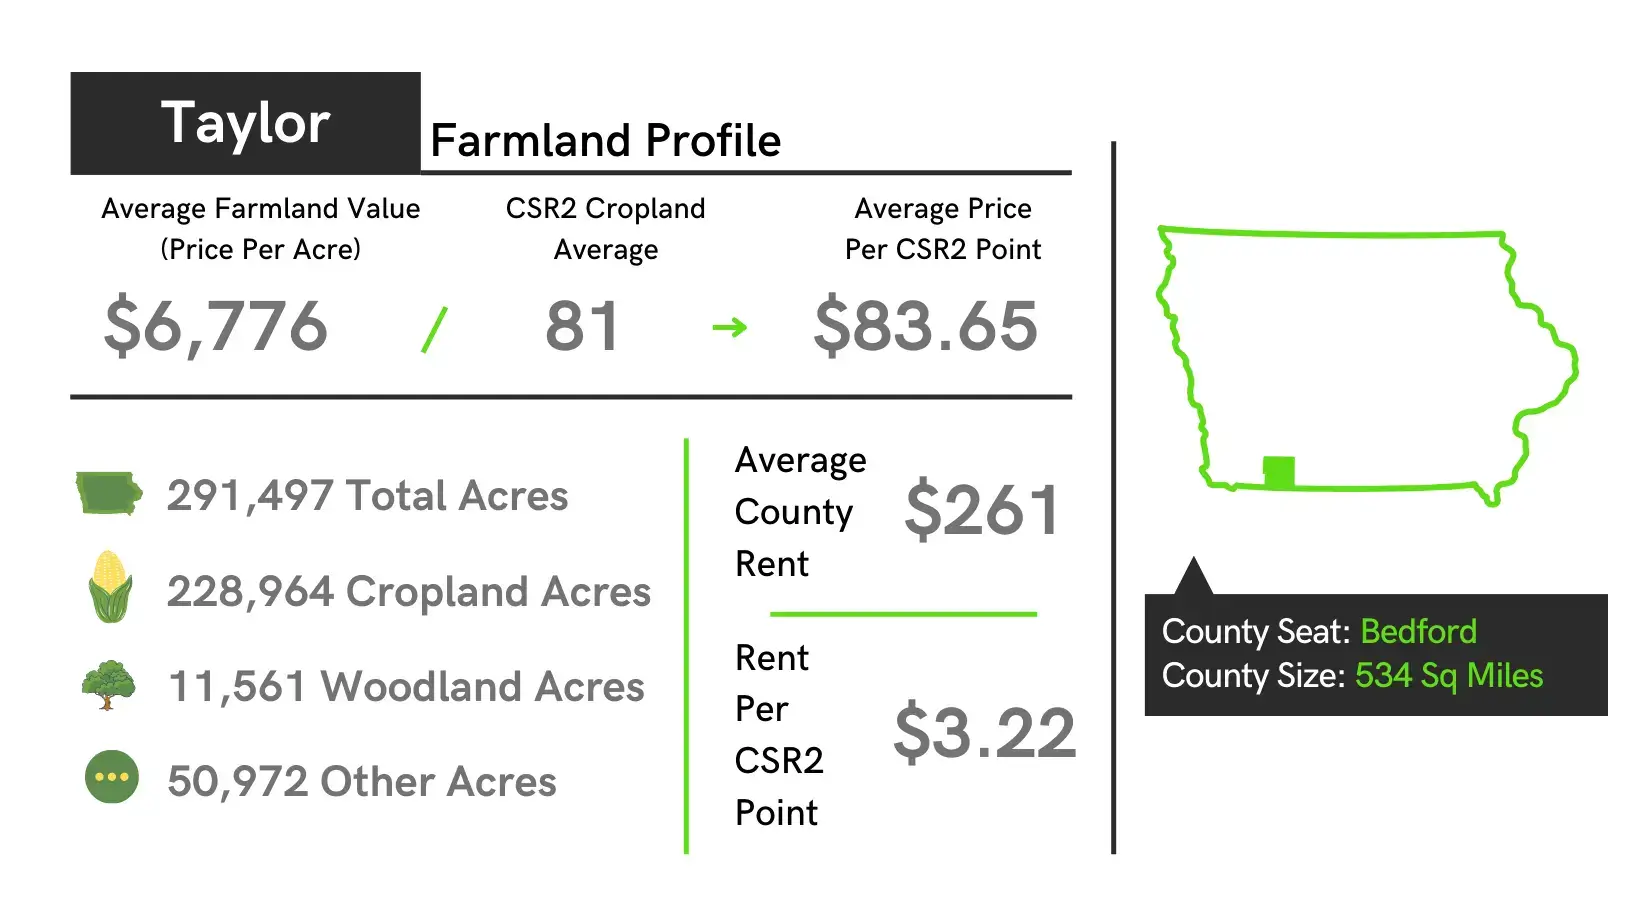 Taylor County Farmland Profile